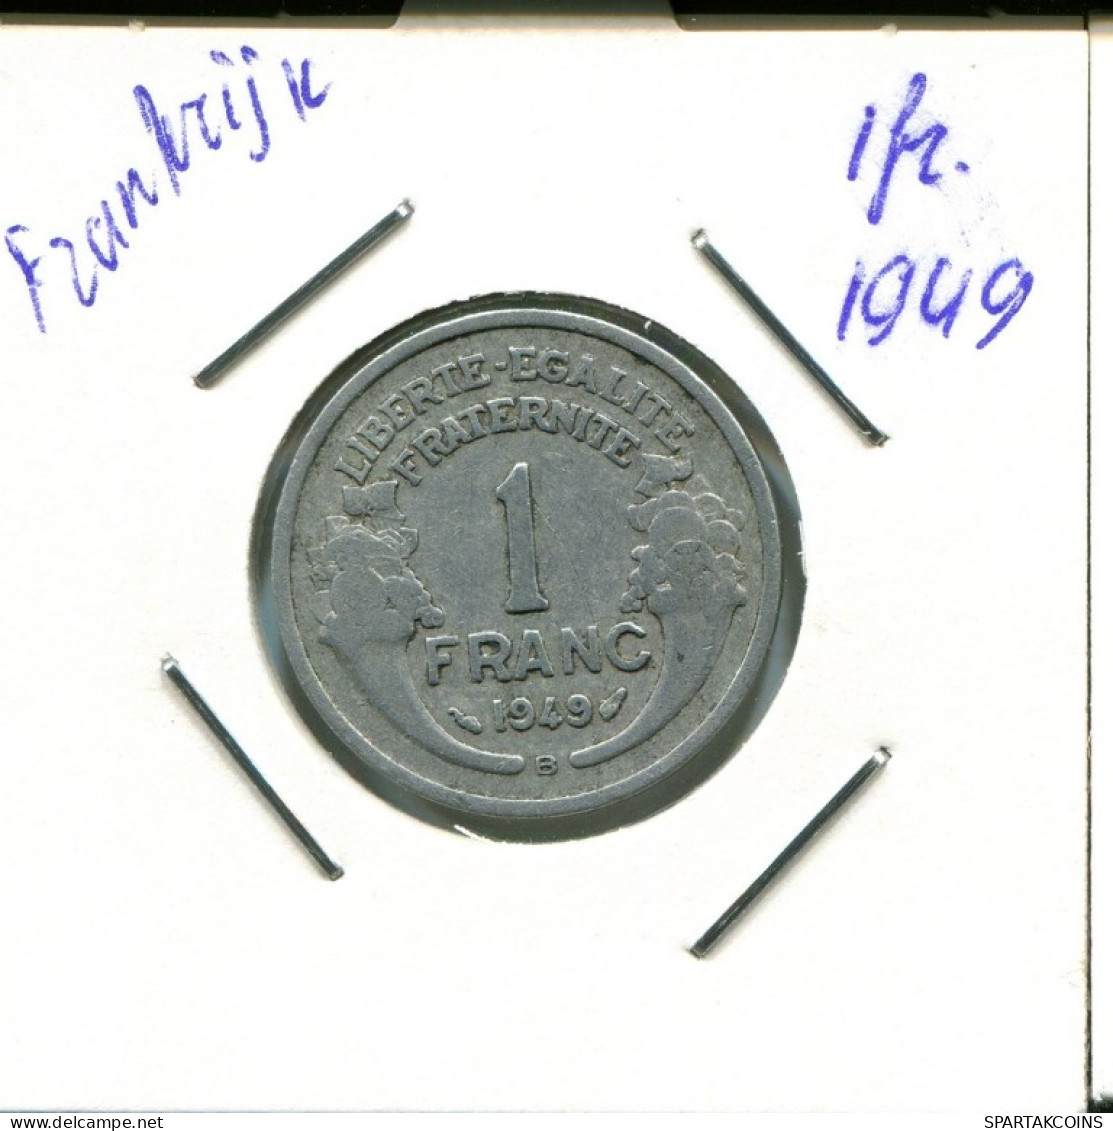 1 FRANC 1949 FRANCE Coin French Coin #AN948.U.A - 1 Franc